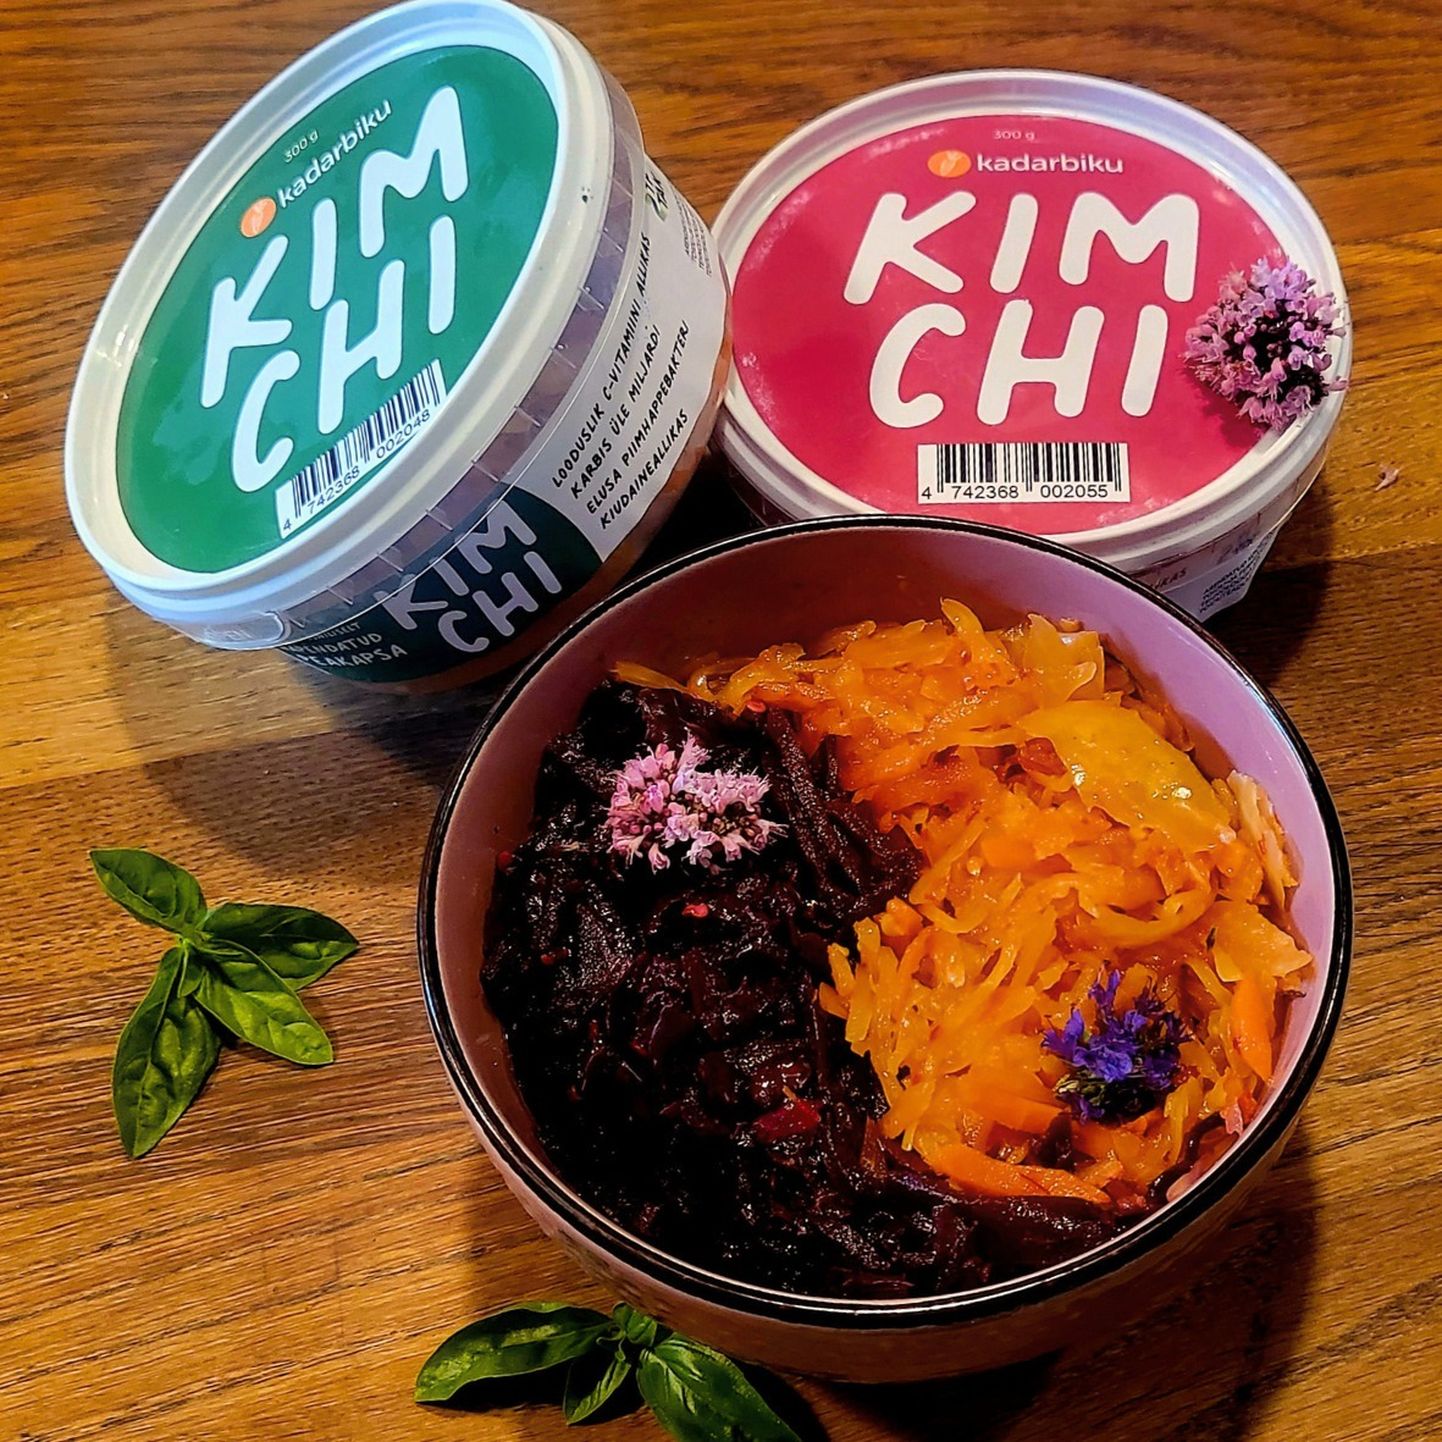 Kadarbiku peakapsa kimchi.